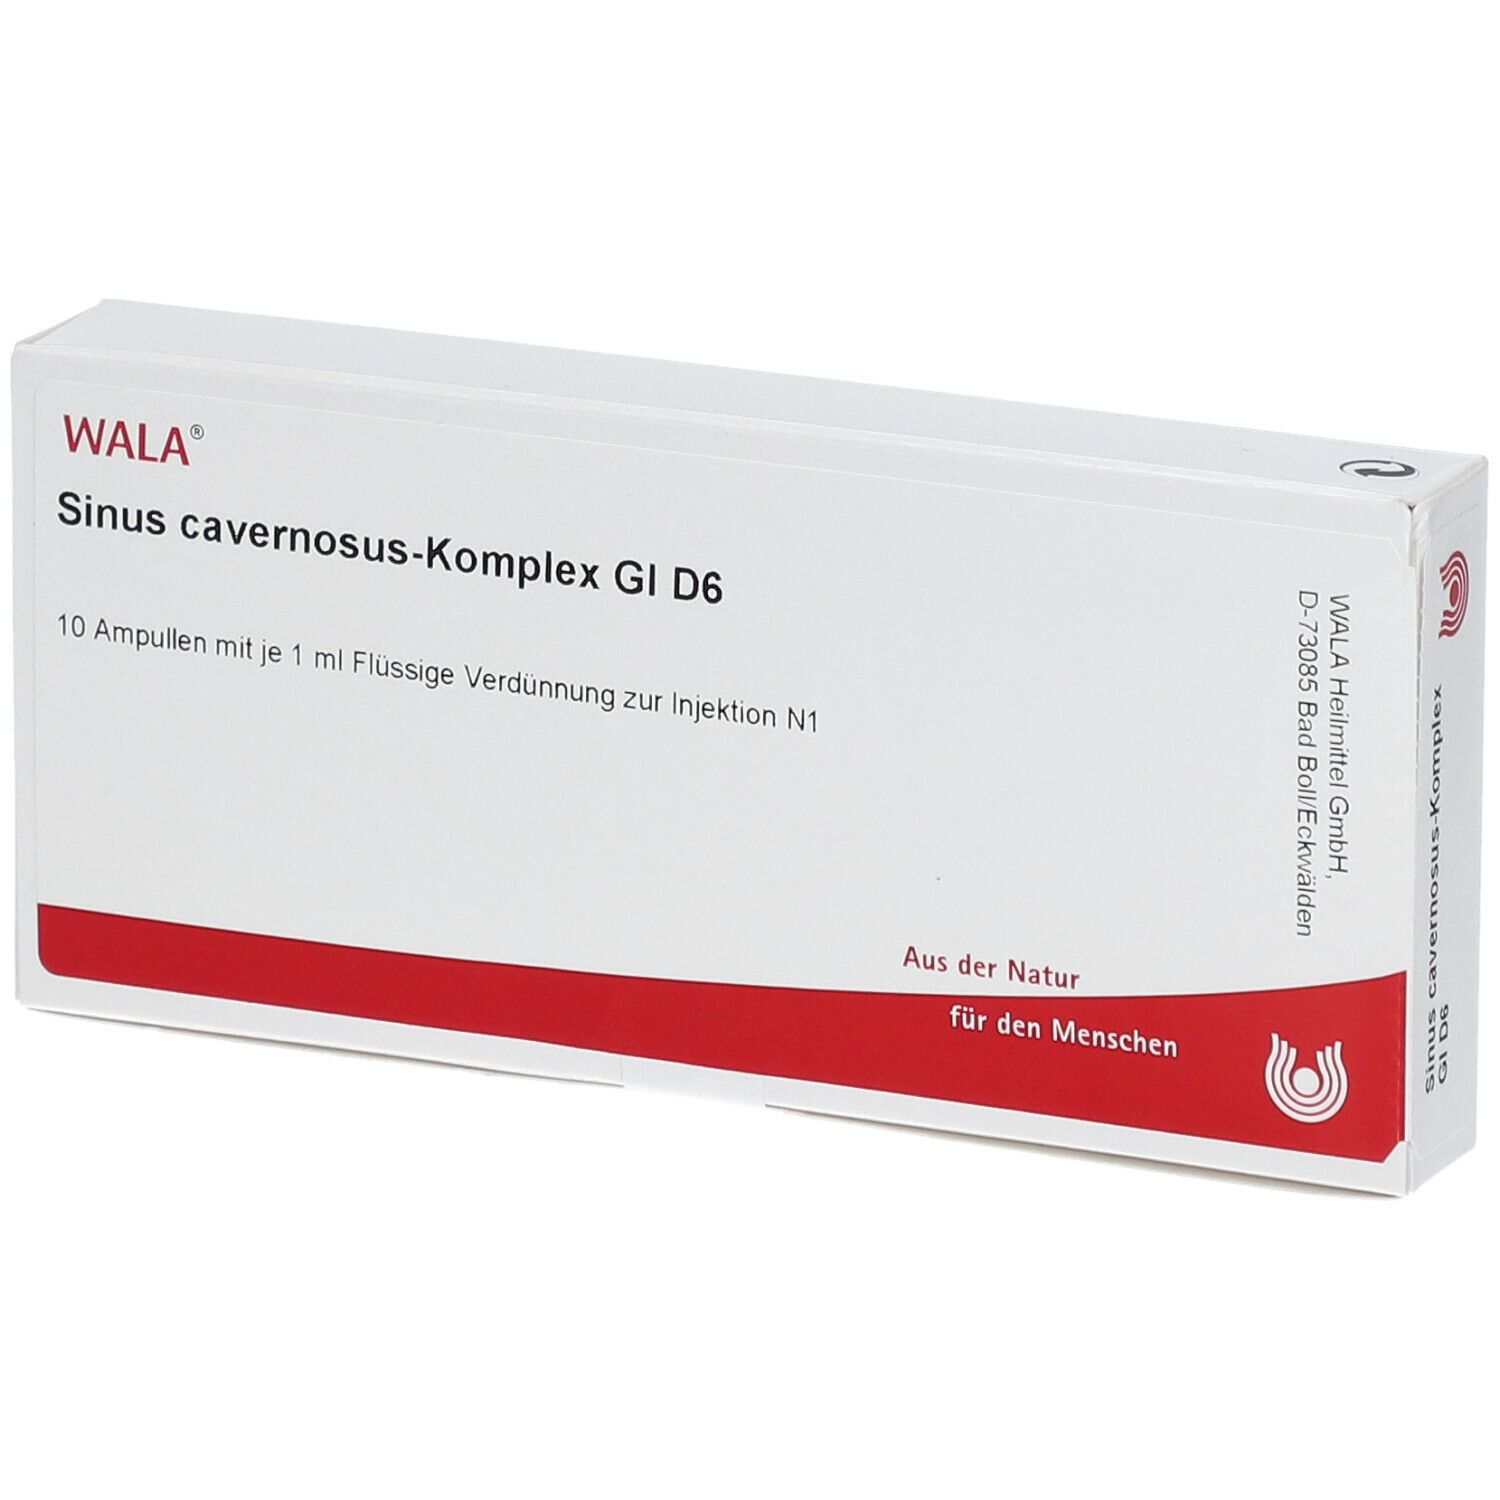 Wala® Sinus cavernosus-Komplex Gl D 6